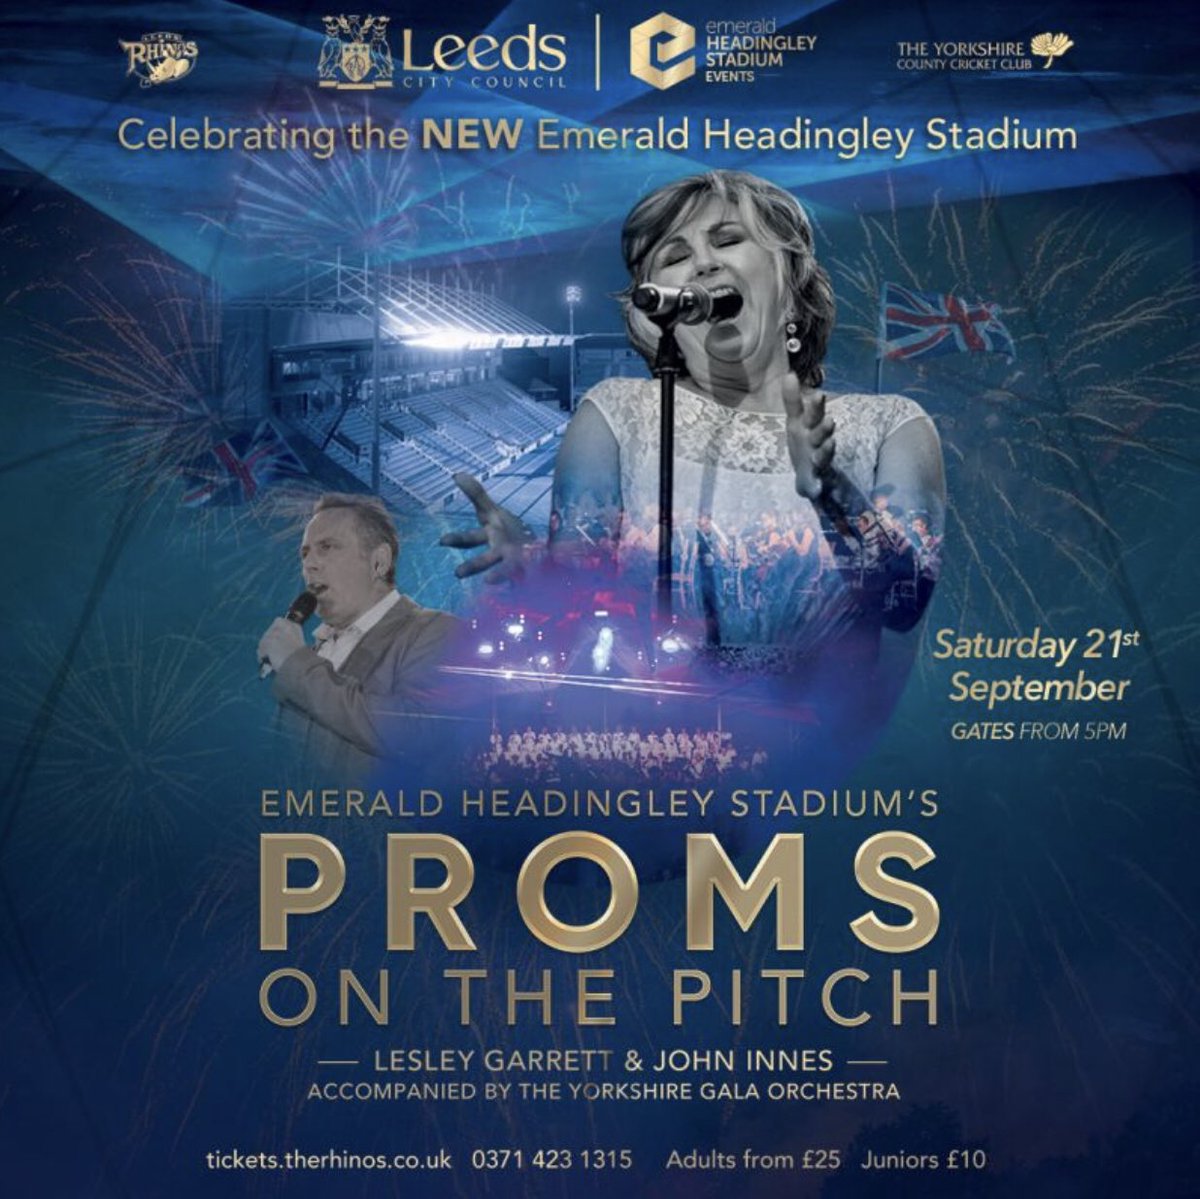 Chuffed to be hosting this event in #Leeds next weekend 🙂#proms #livemusic #host #yorkshire #headingleystadium #lesleygarrett #johninnes #yorkshiregalaorchestra